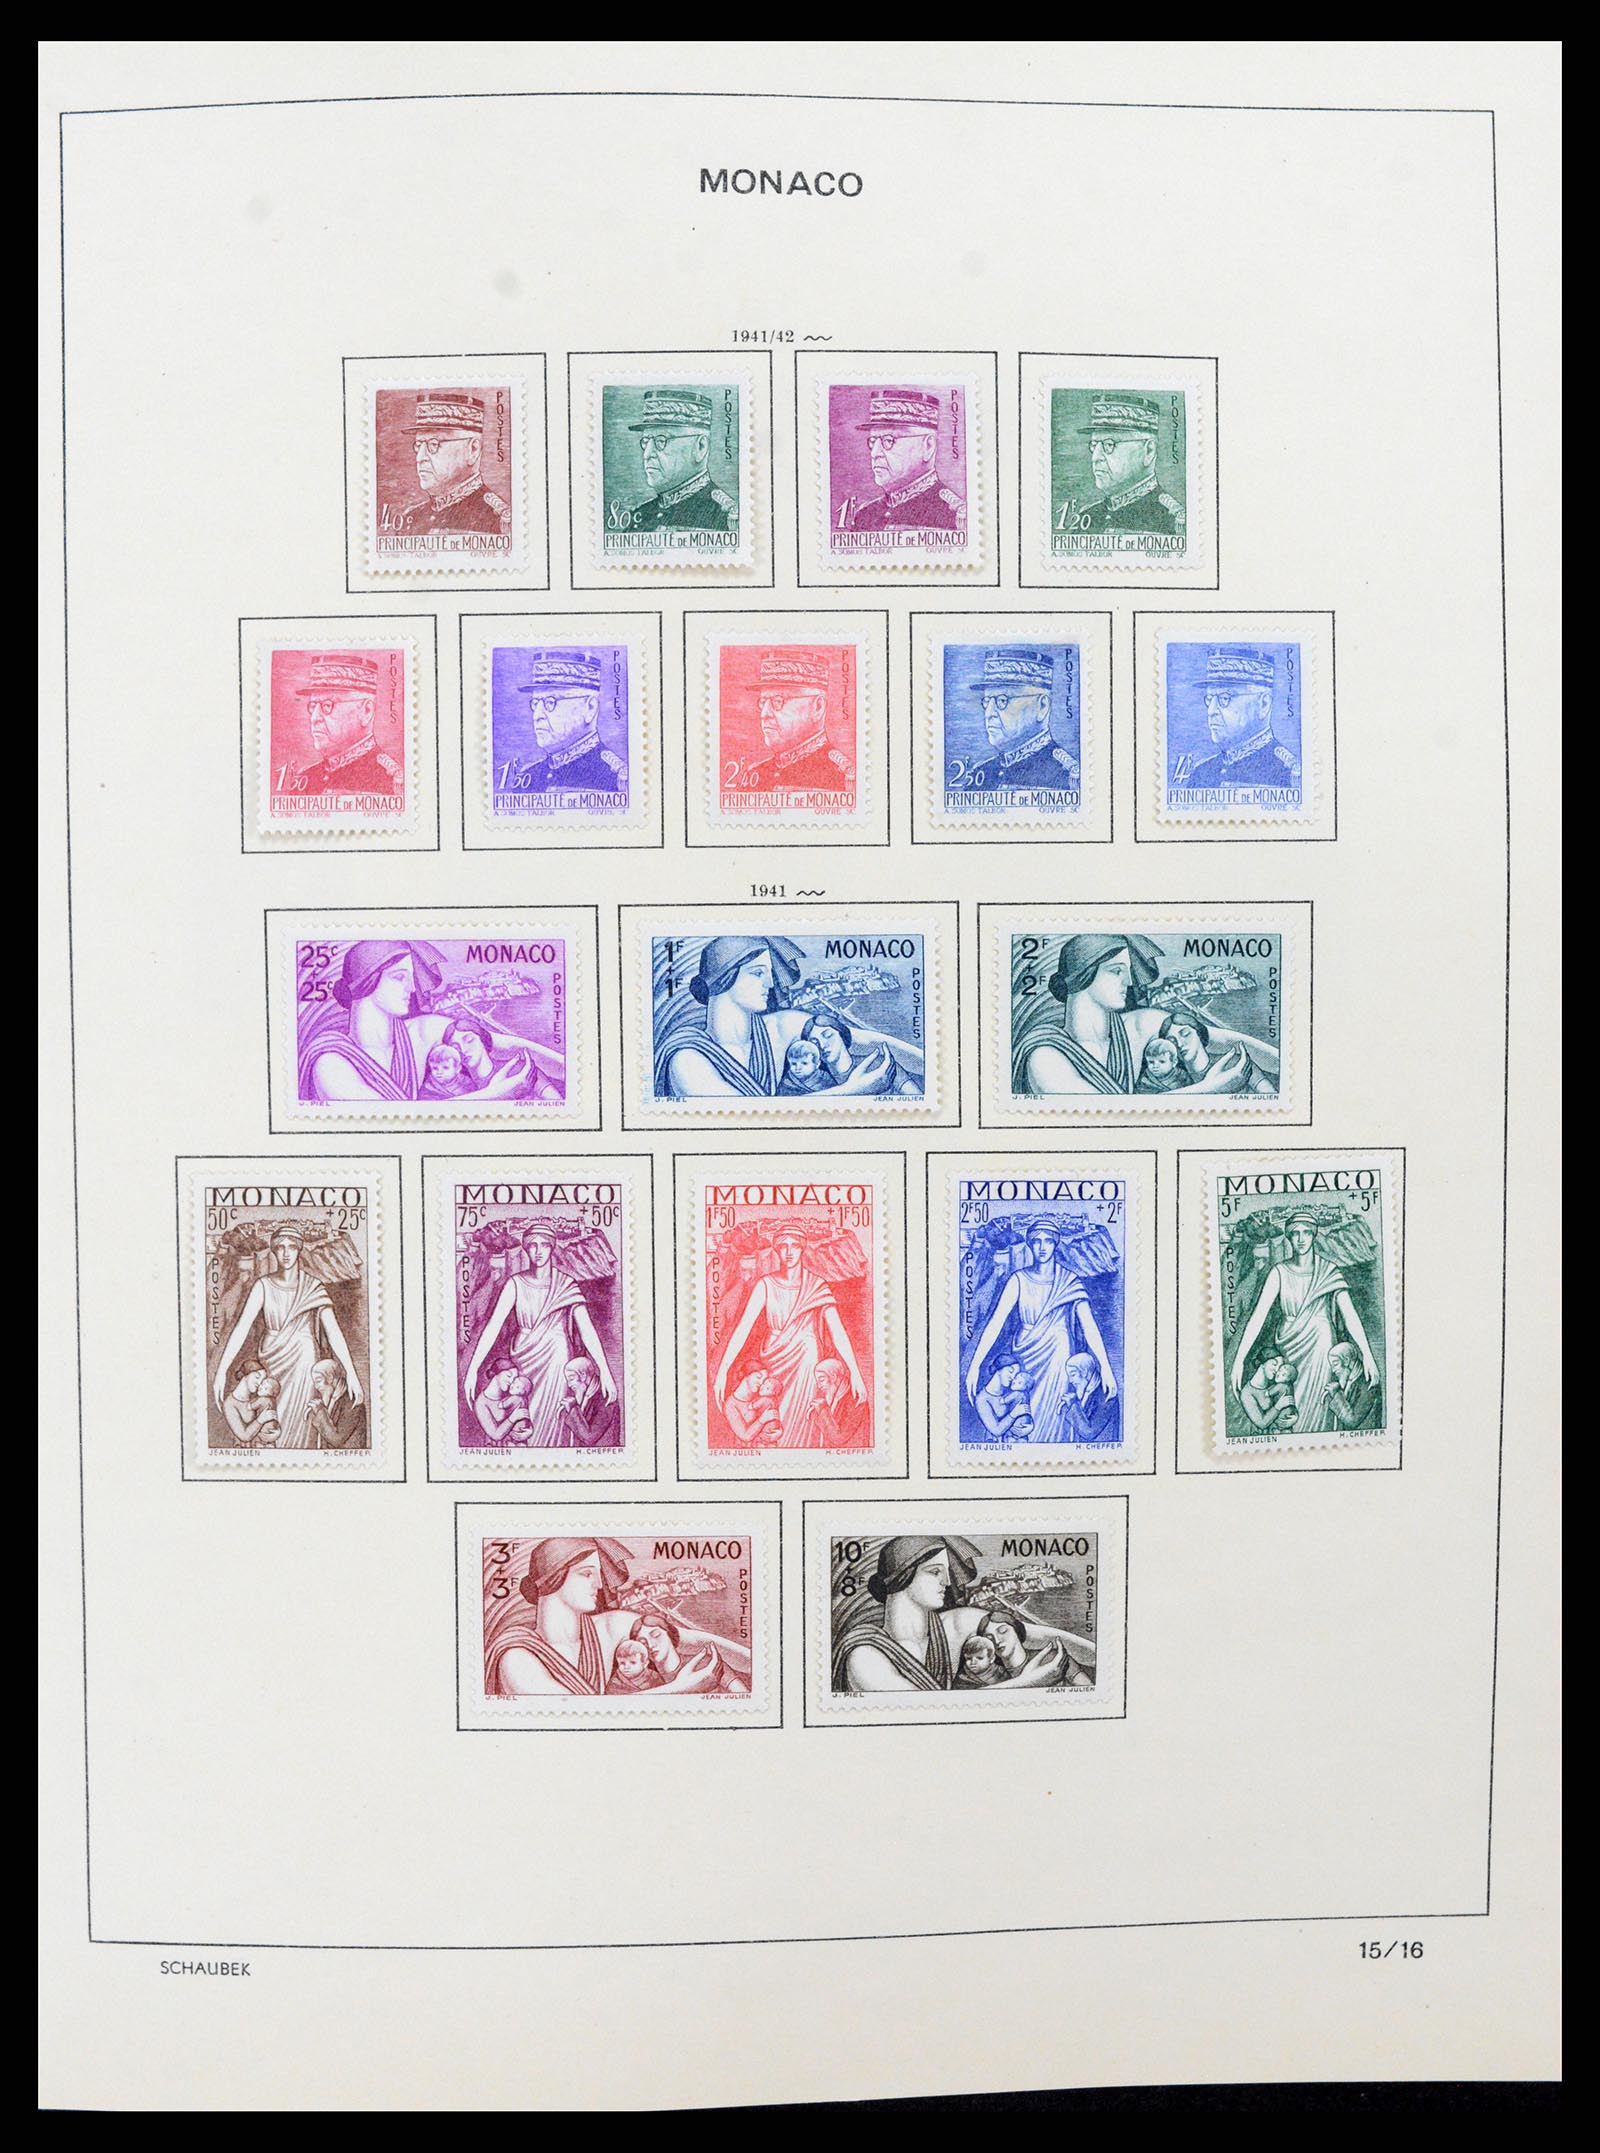 37570 016 - Stamp collection 37570 Monaco 1885-2013.